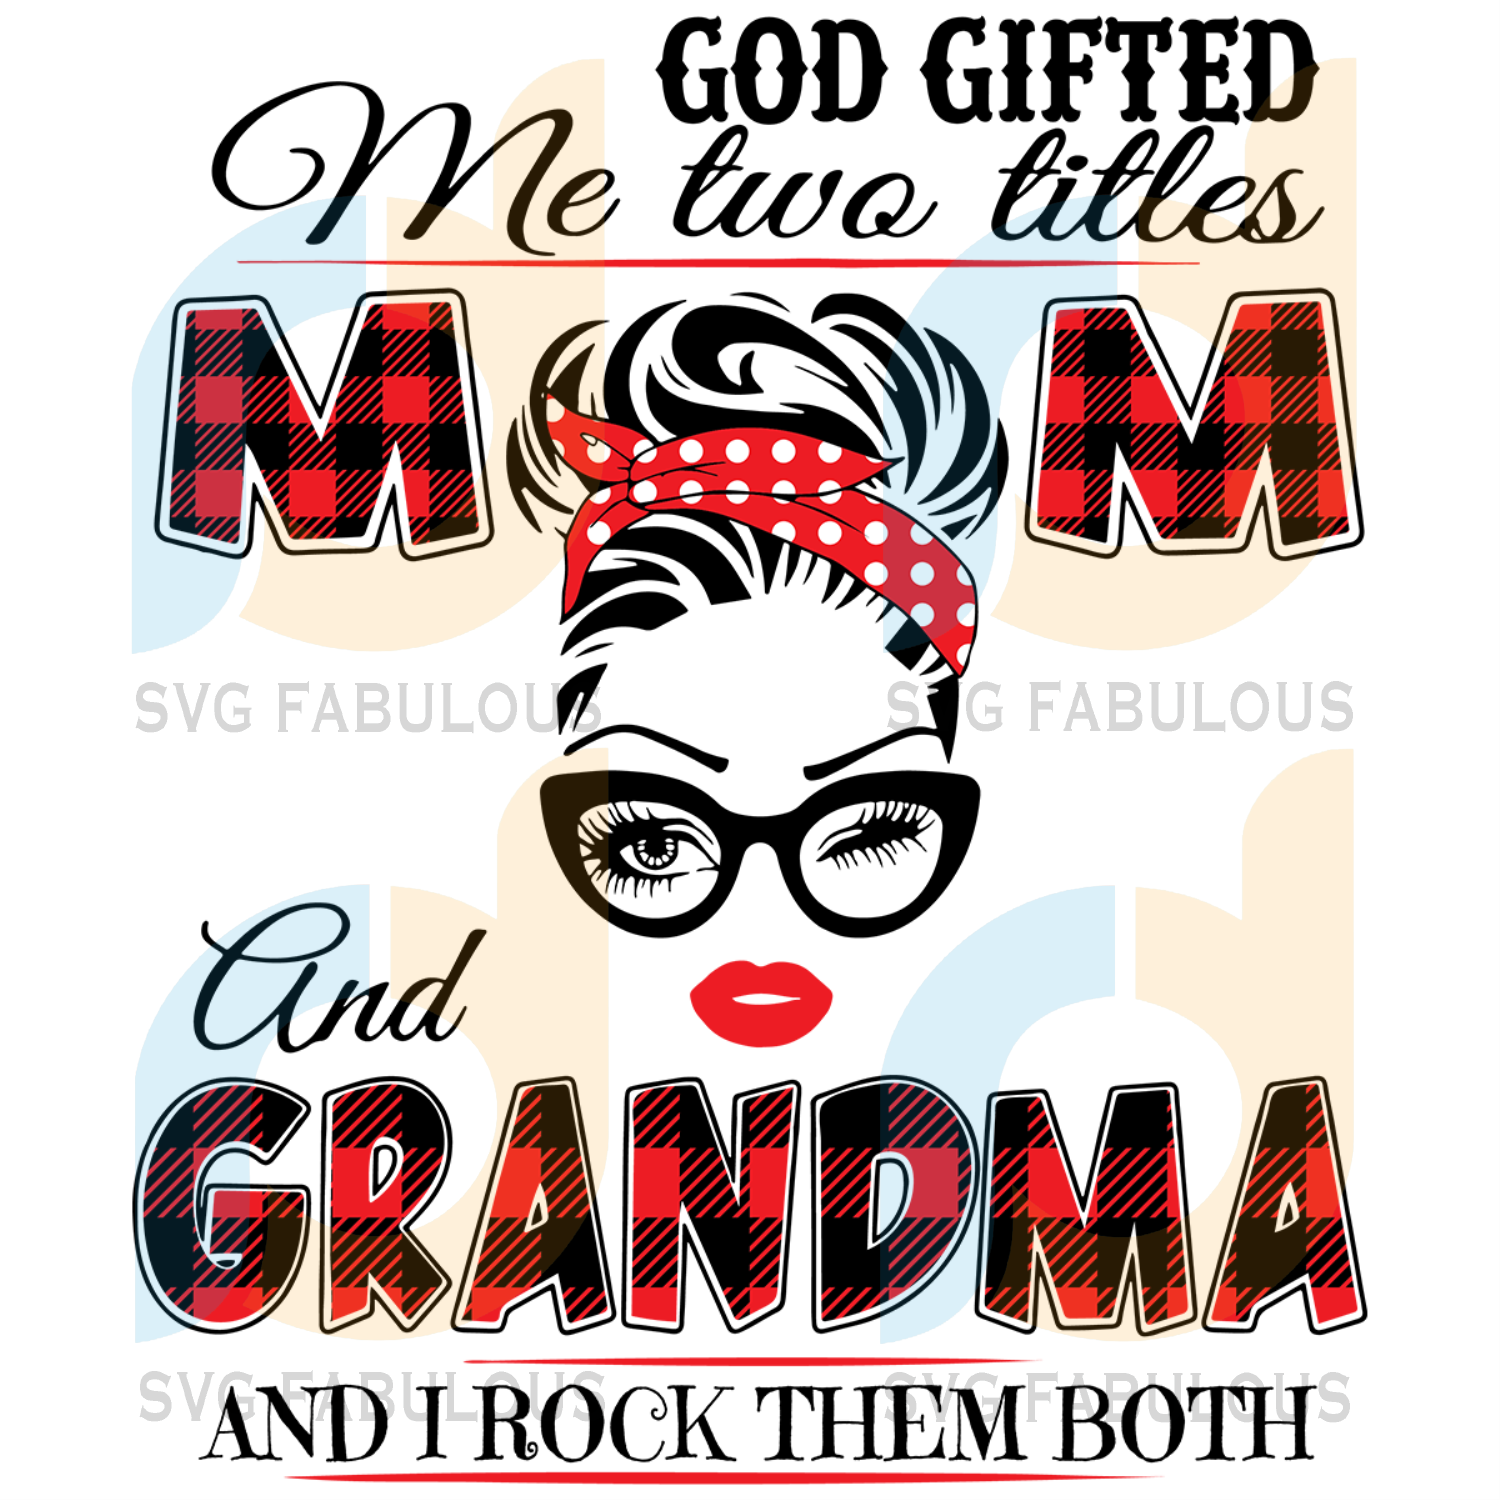 Free Free 194 Mother Grandma Svg SVG PNG EPS DXF File